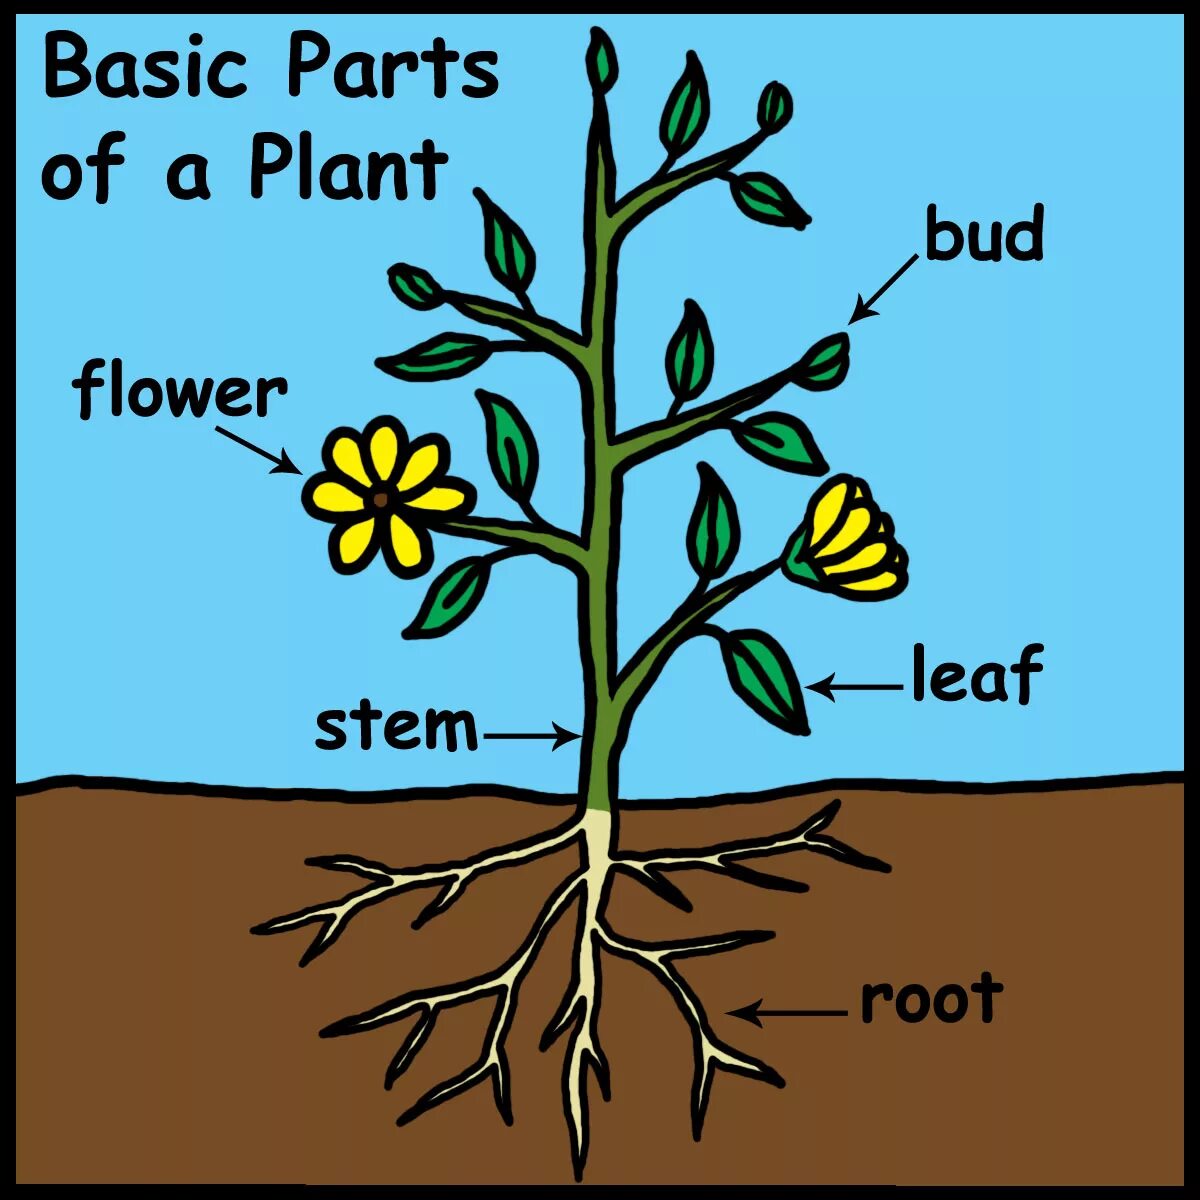 Simply plants. Части растения. Parts of a Plant. Parts of Plants for Kids. Parts of a Plant цветок.